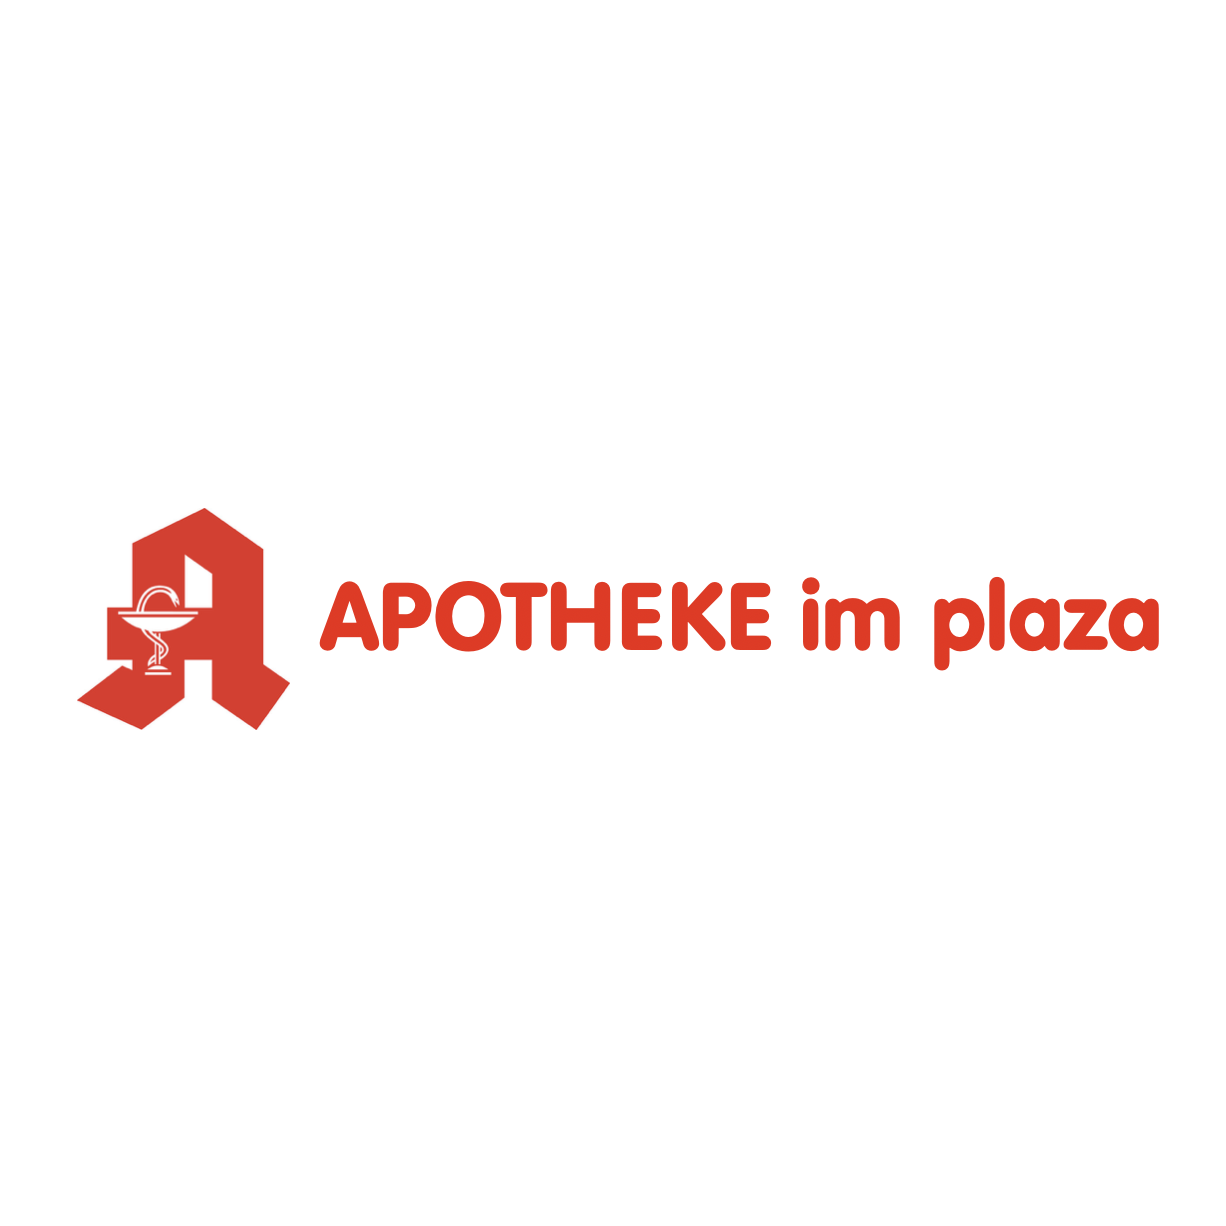 Apotheke im Plaza in Geesthacht - Logo